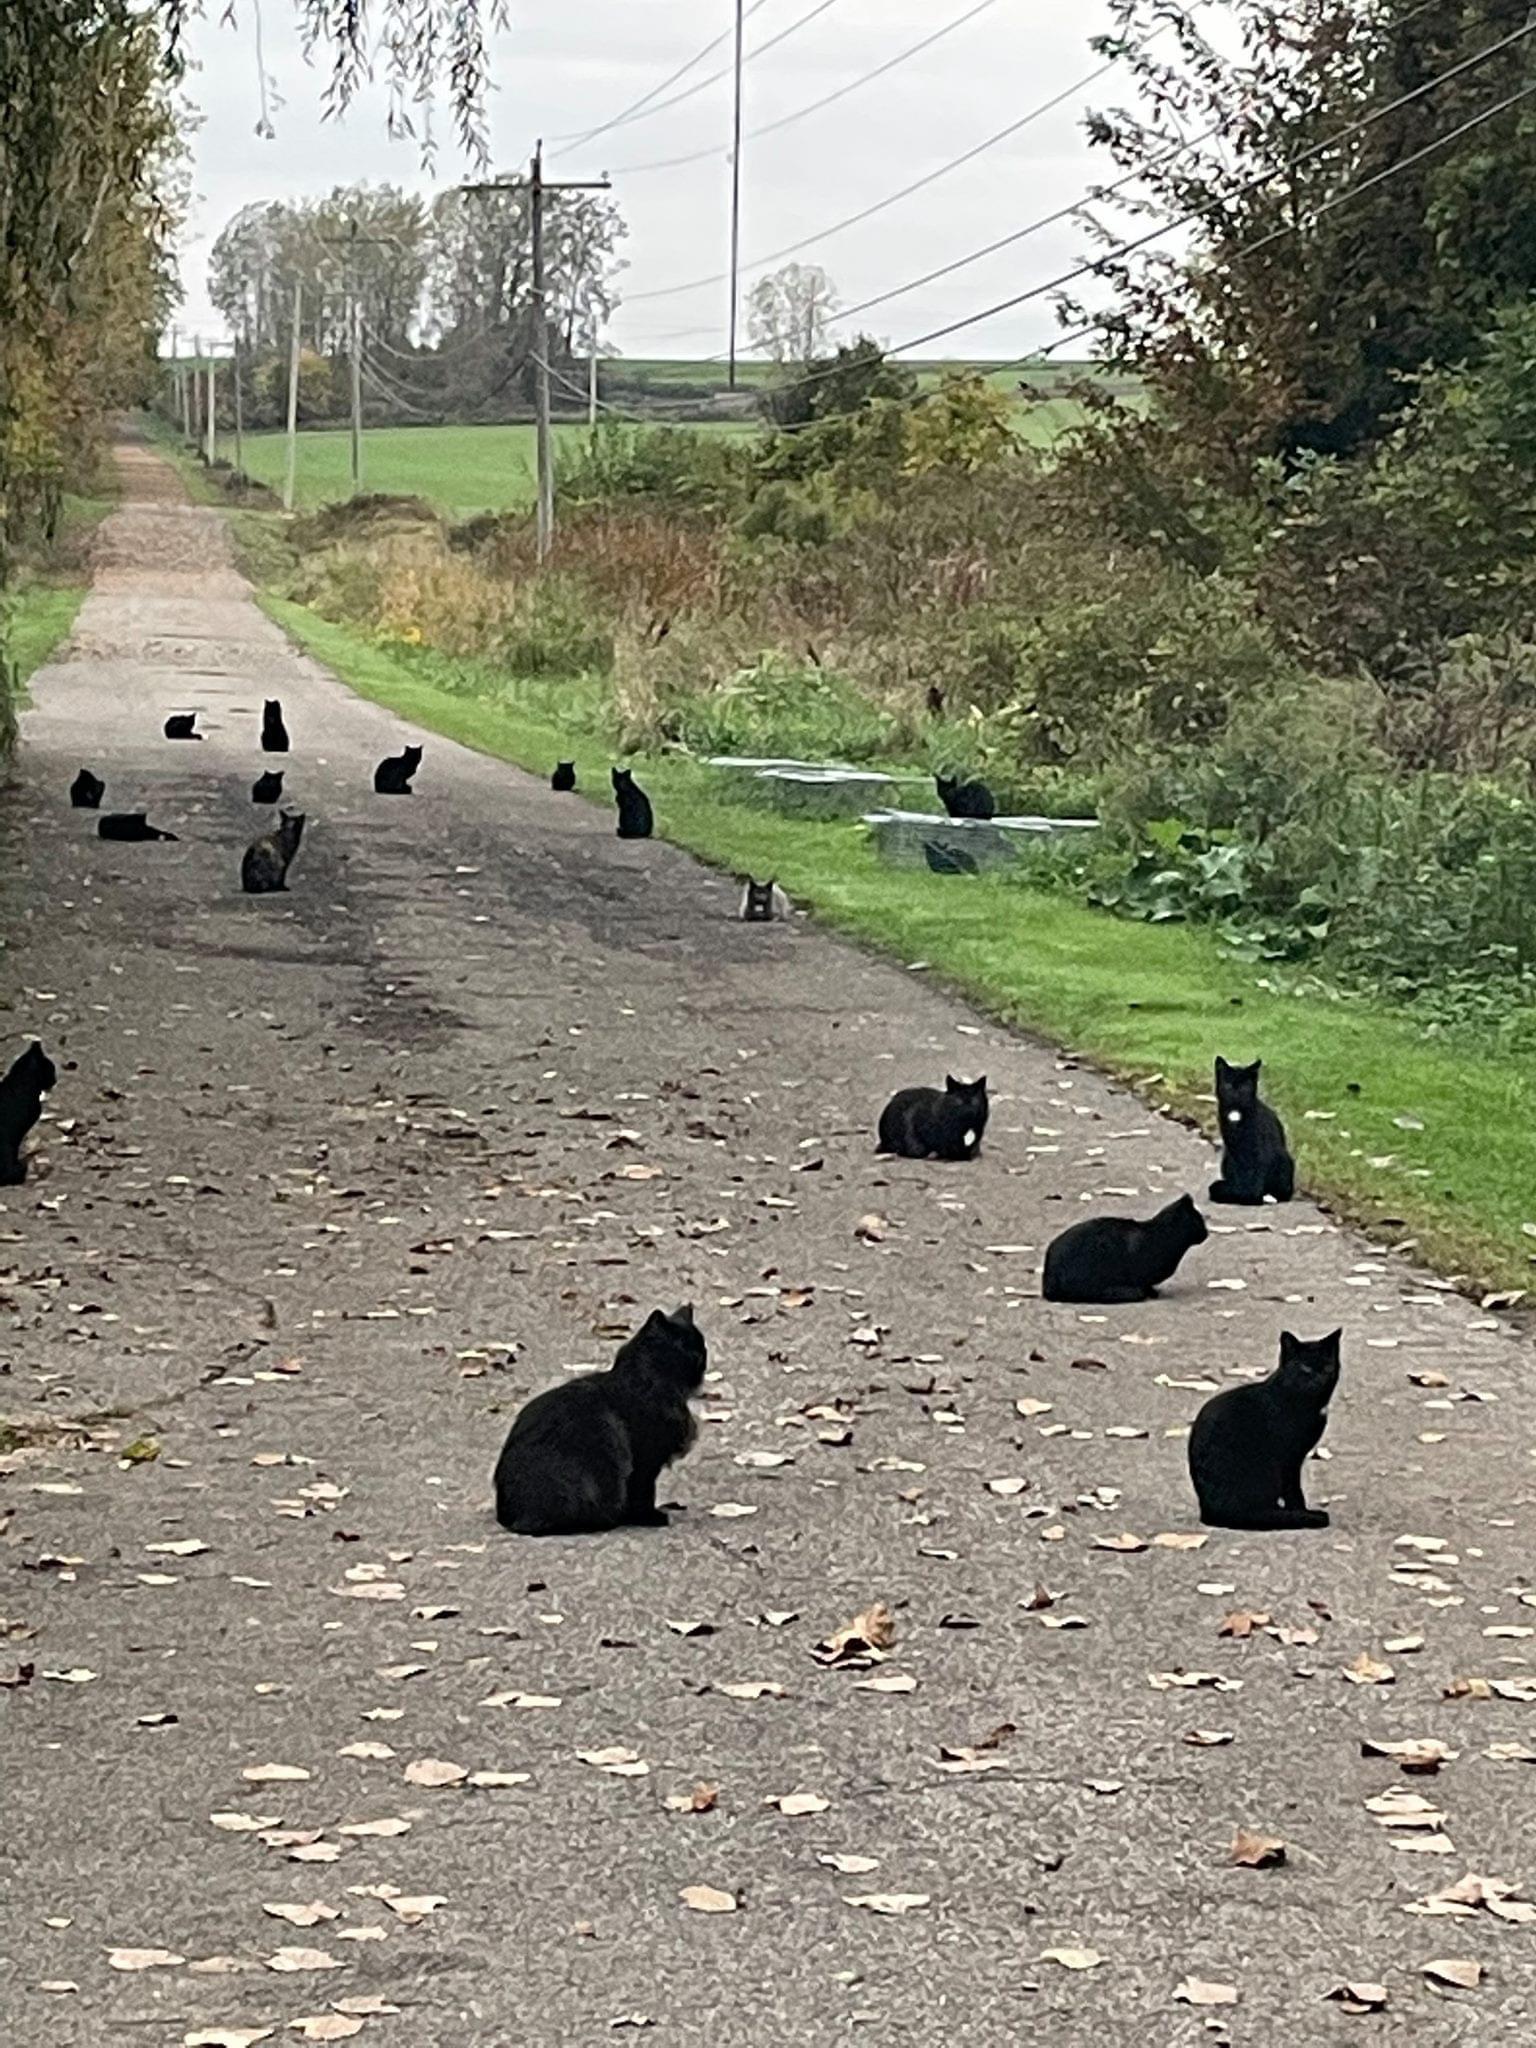 20 black cats sitting on a street